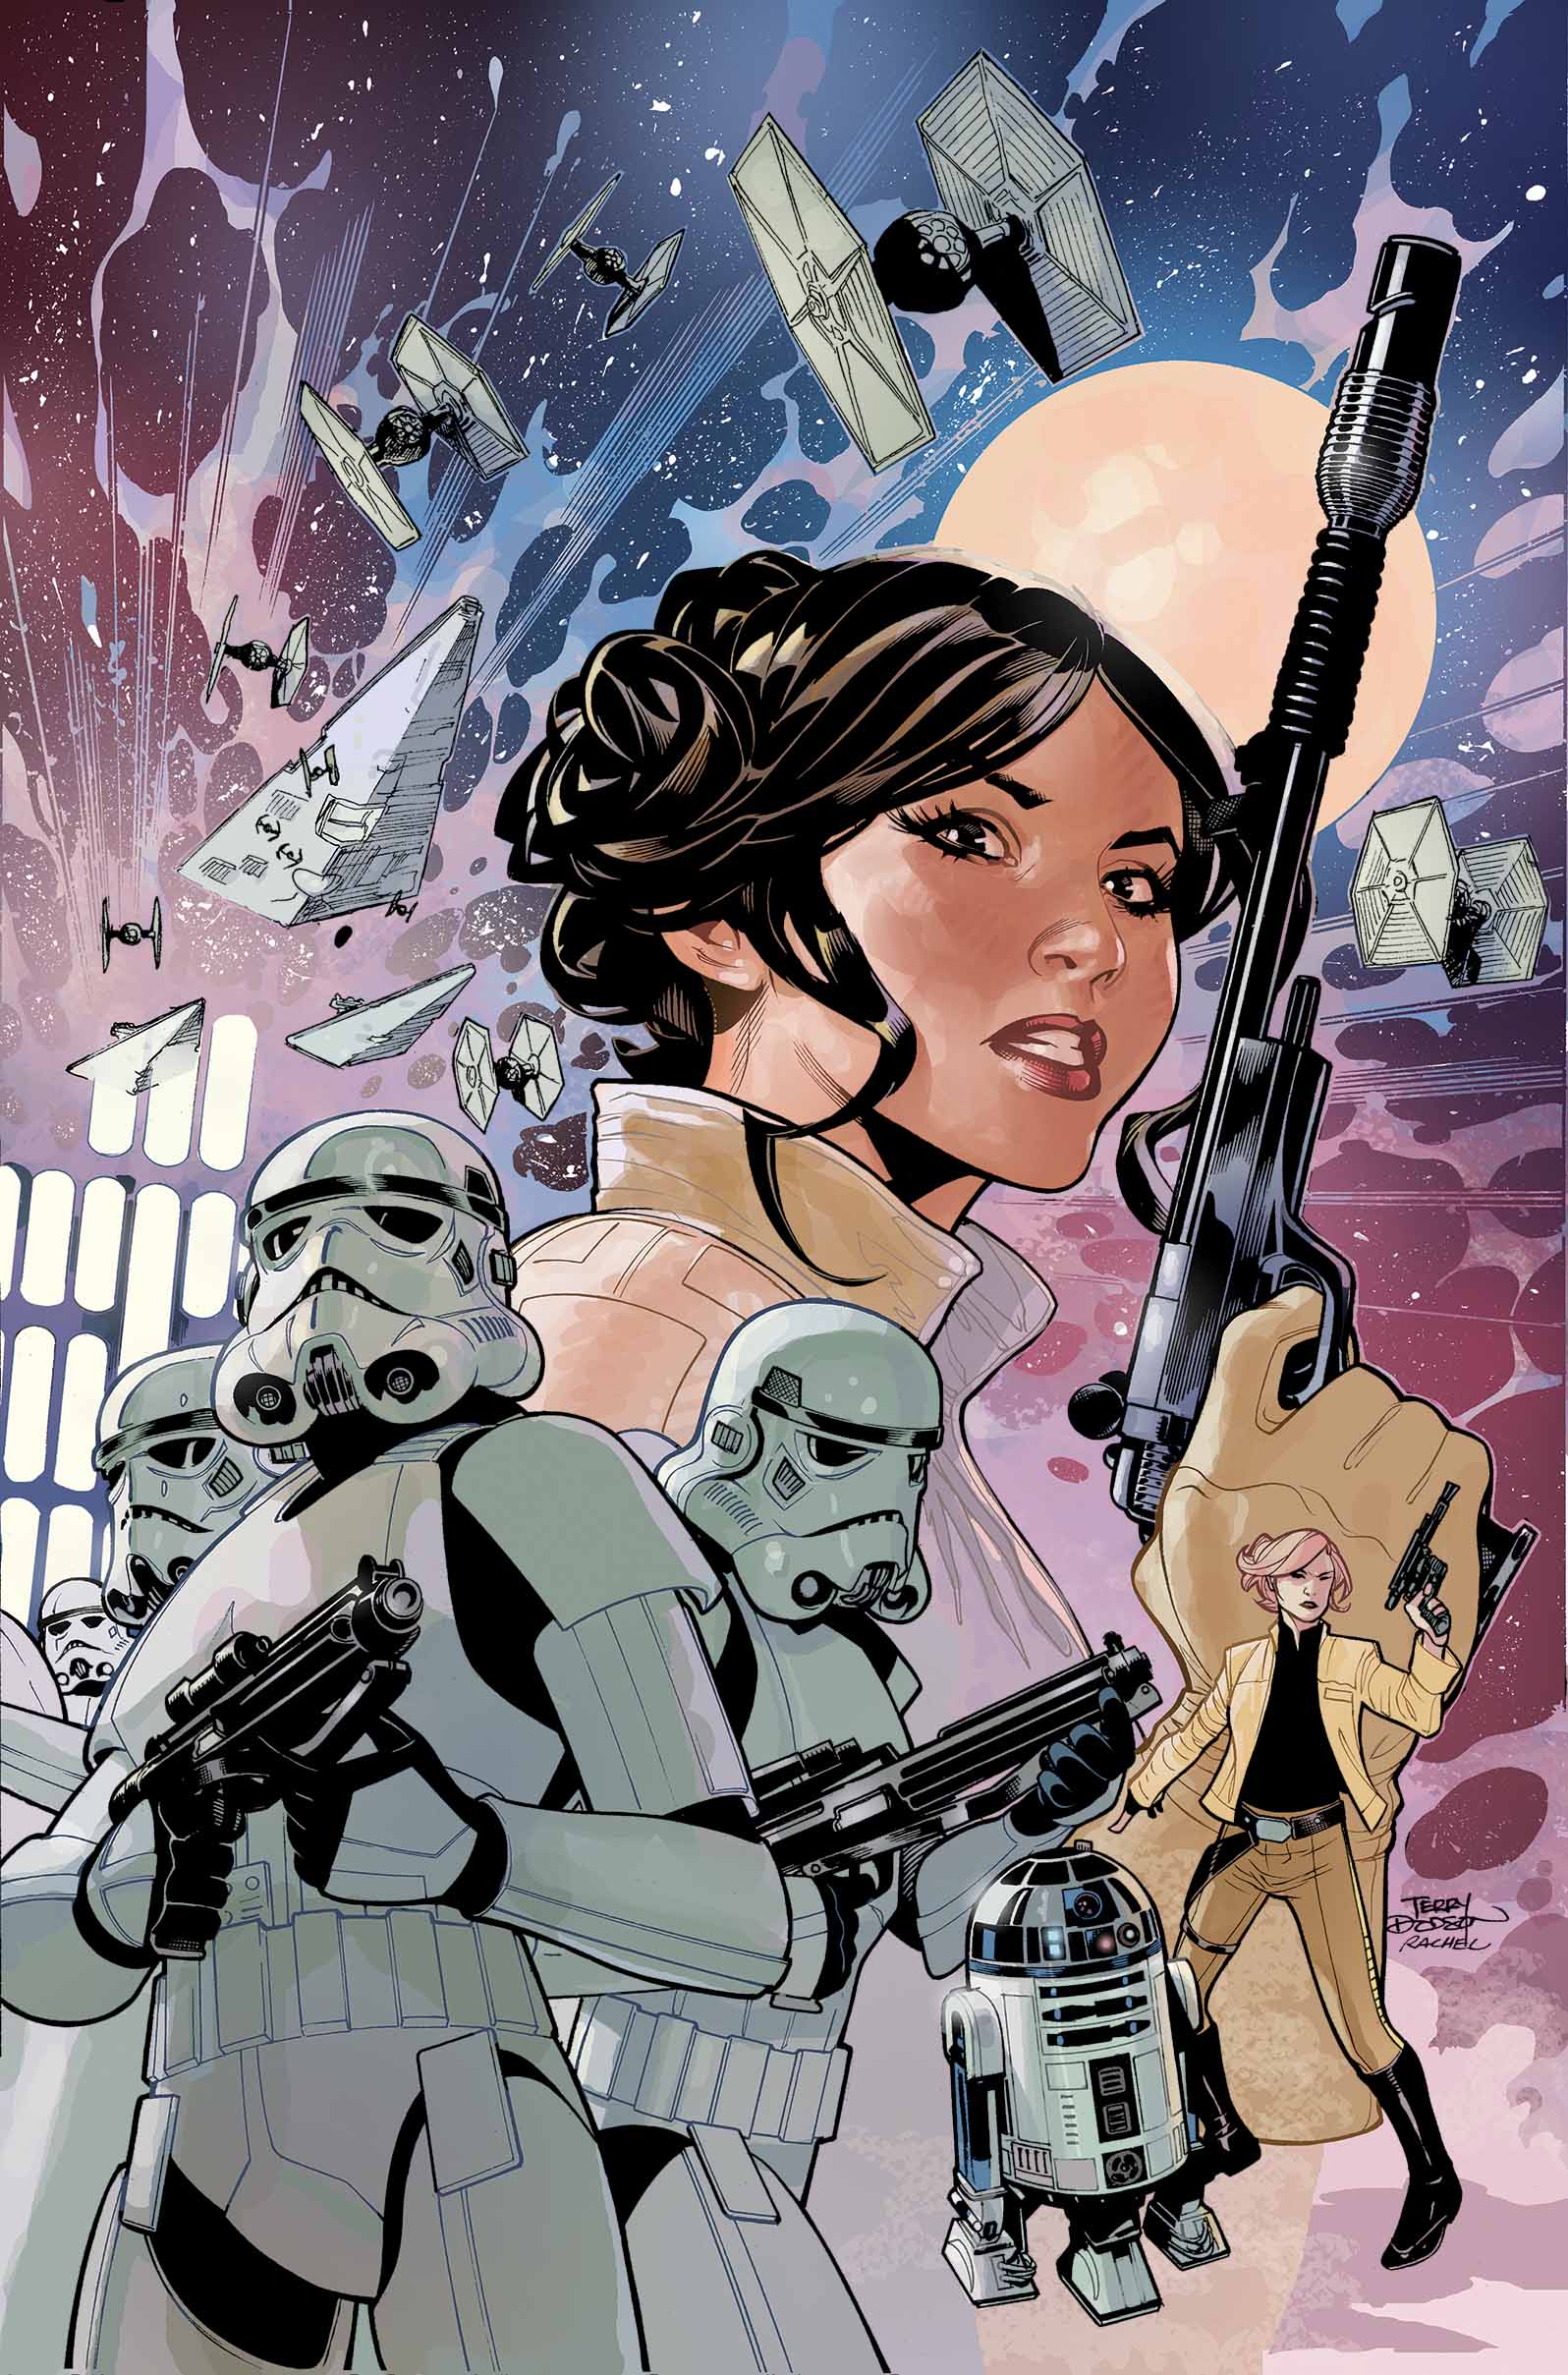 Plik:Princess Leia 4 cover art.jpg